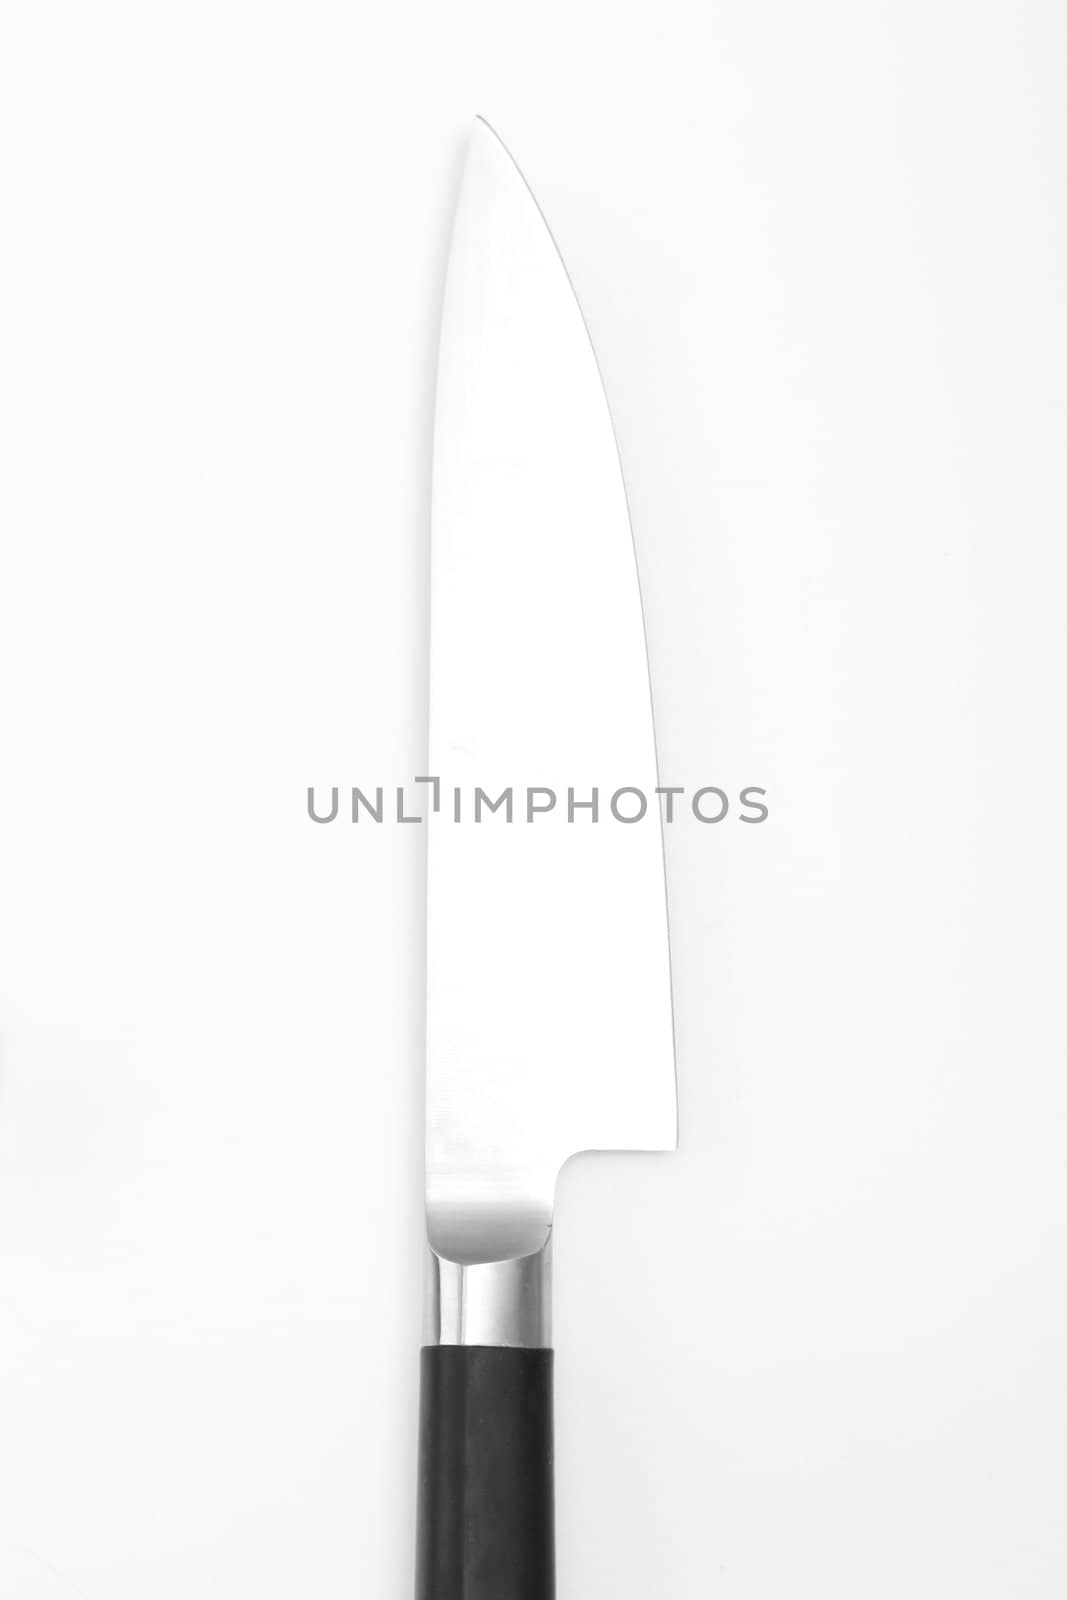 Knife by leeser